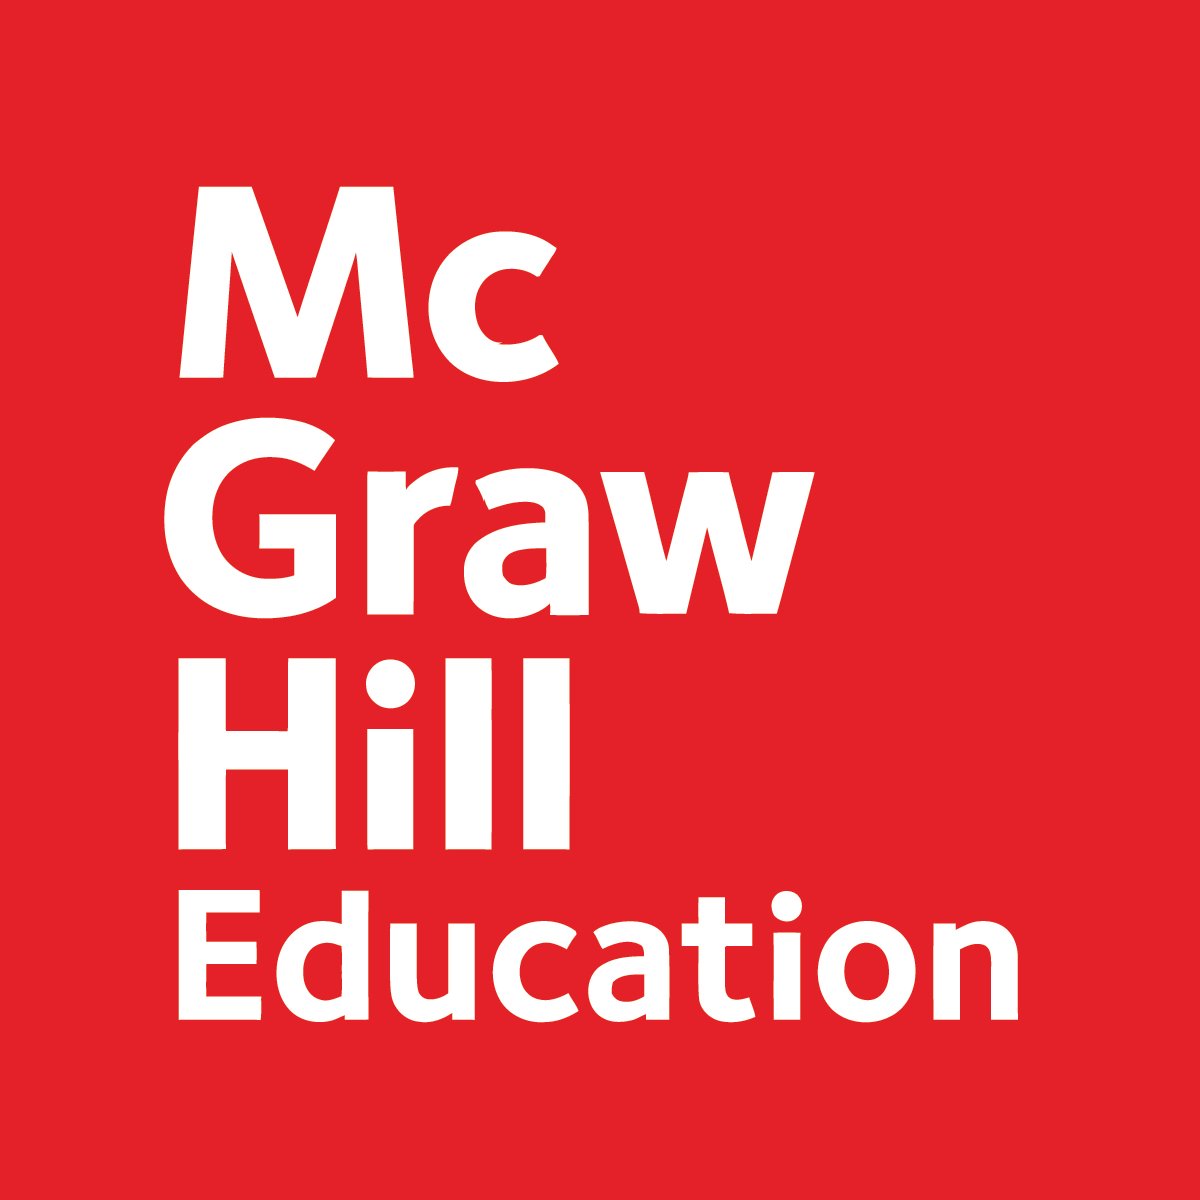 Mc graw hill1